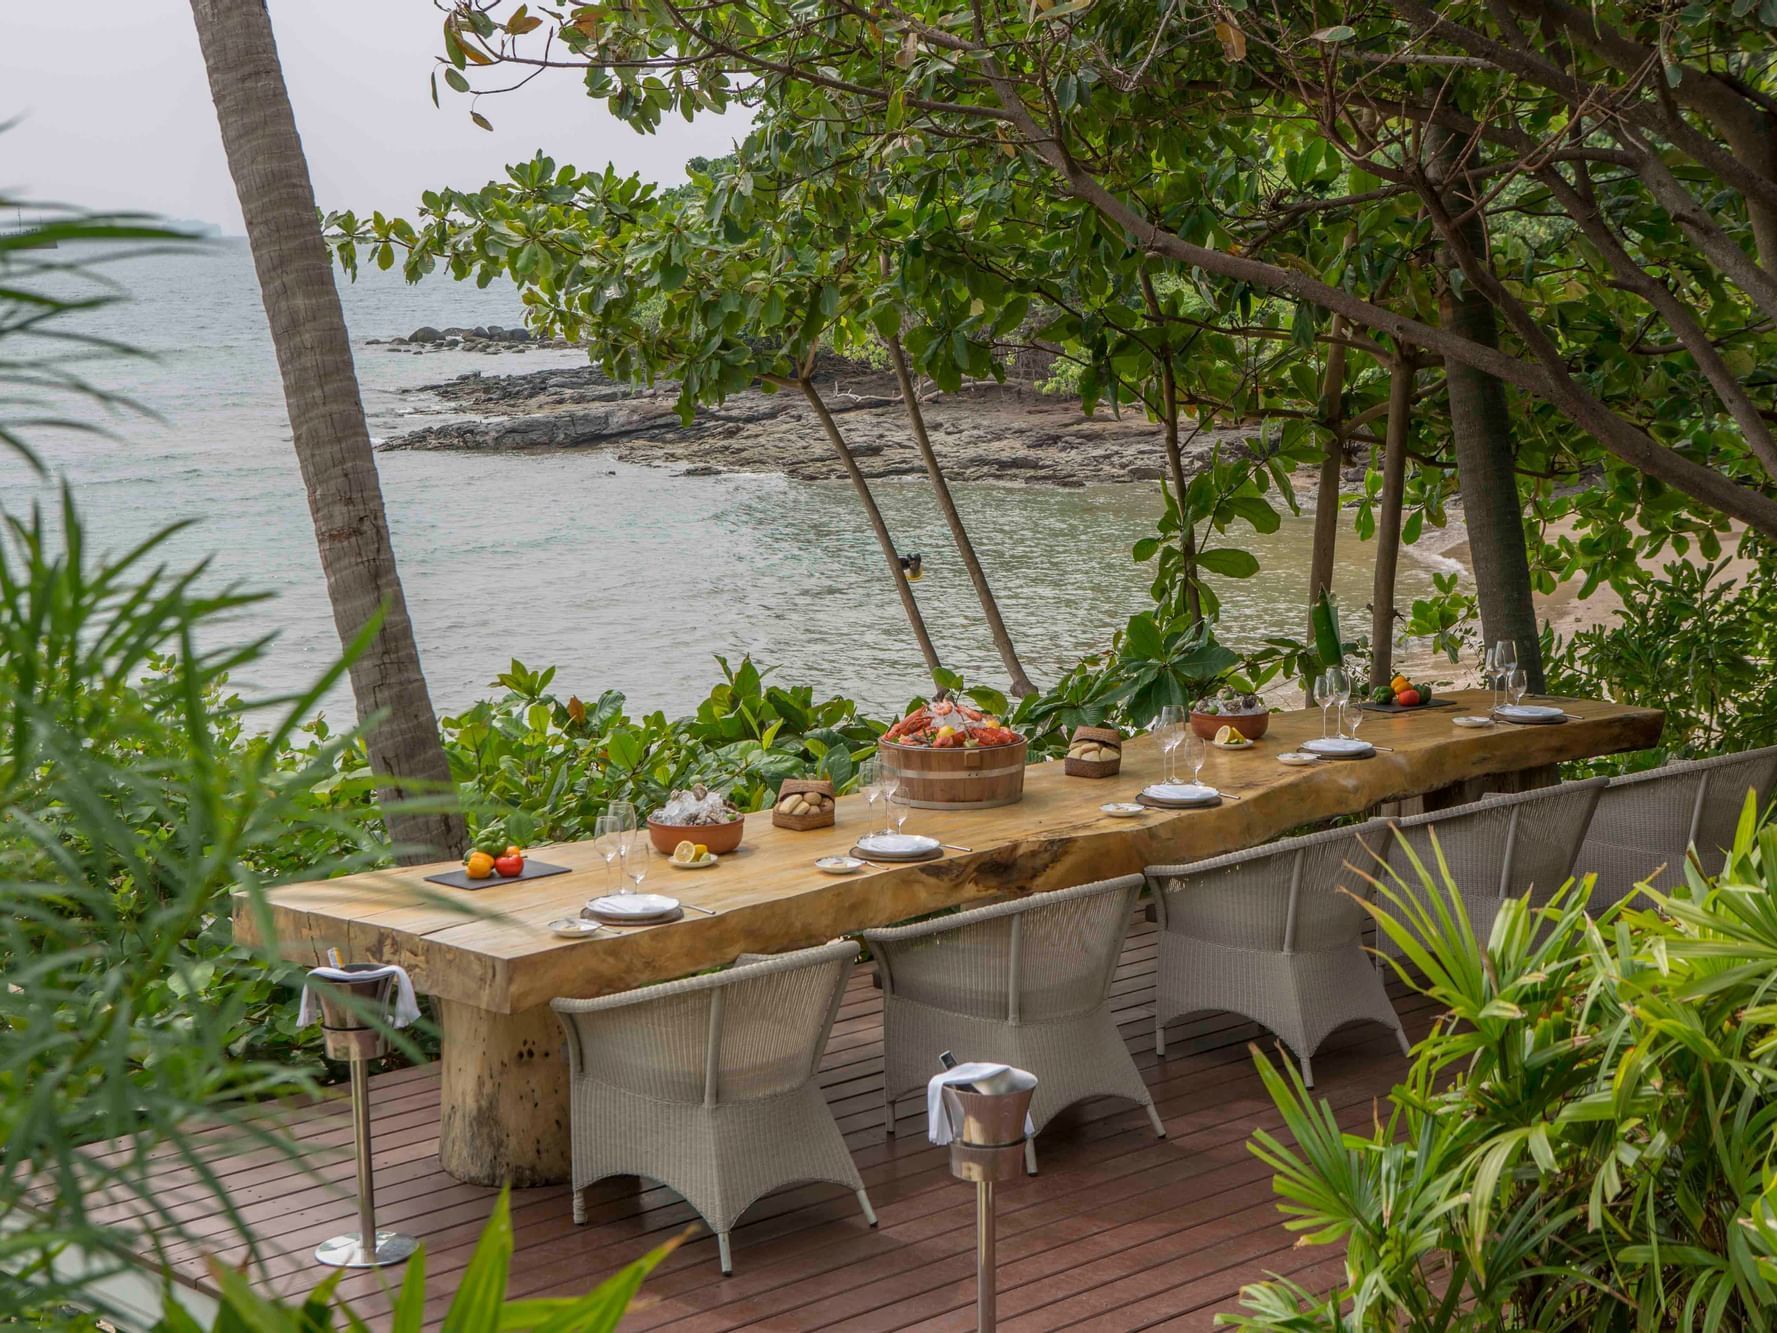 Dining Table setup near the beach at Amatara Wellness Resort